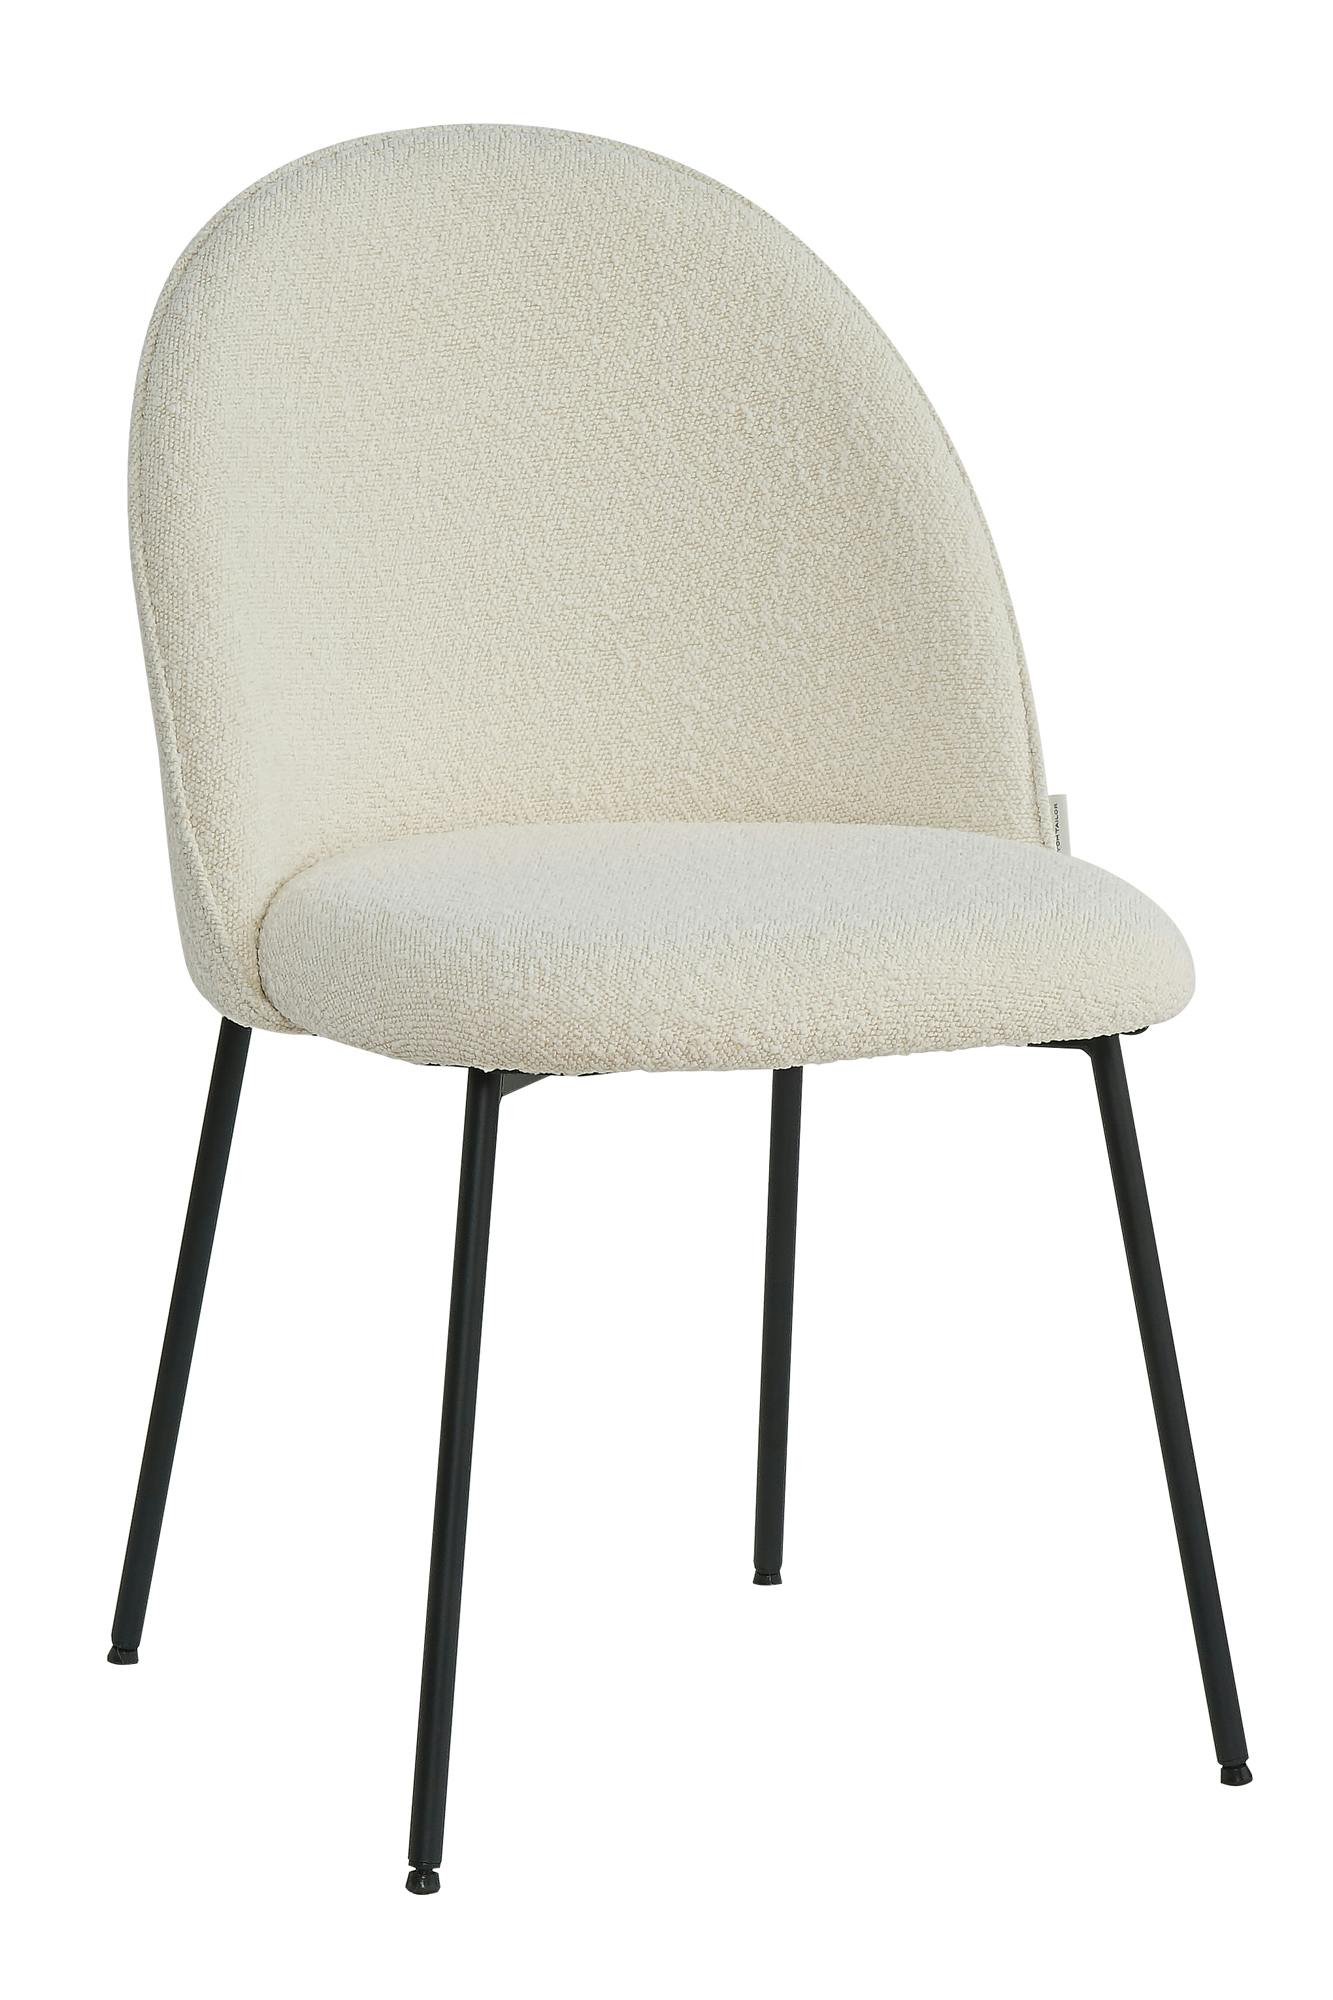 |02412-03 Chair SIT&CHAIRS | | Tom | METRO beige| Pad Beine |Serie Tailor SIT B57xT54xH52cm Stuhl T-Bouclé Möbel Marktplatz 2er-Set | schwarz gepolstert Metall